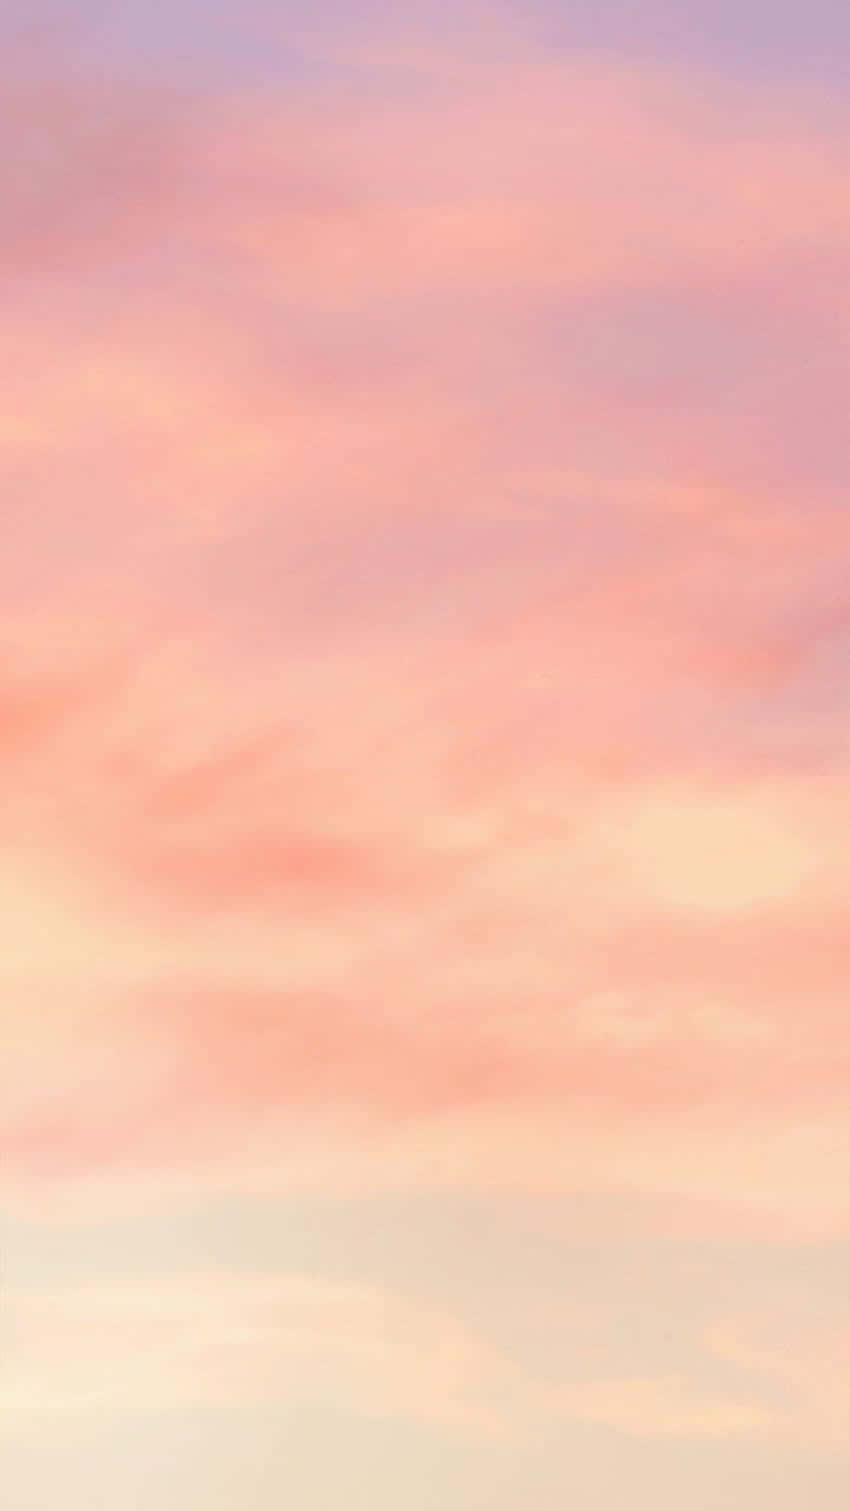 Céusde Lavanda E Nuvens Rosas E Esvoaçantes - Estética Pastel De Cores. Papel de Parede